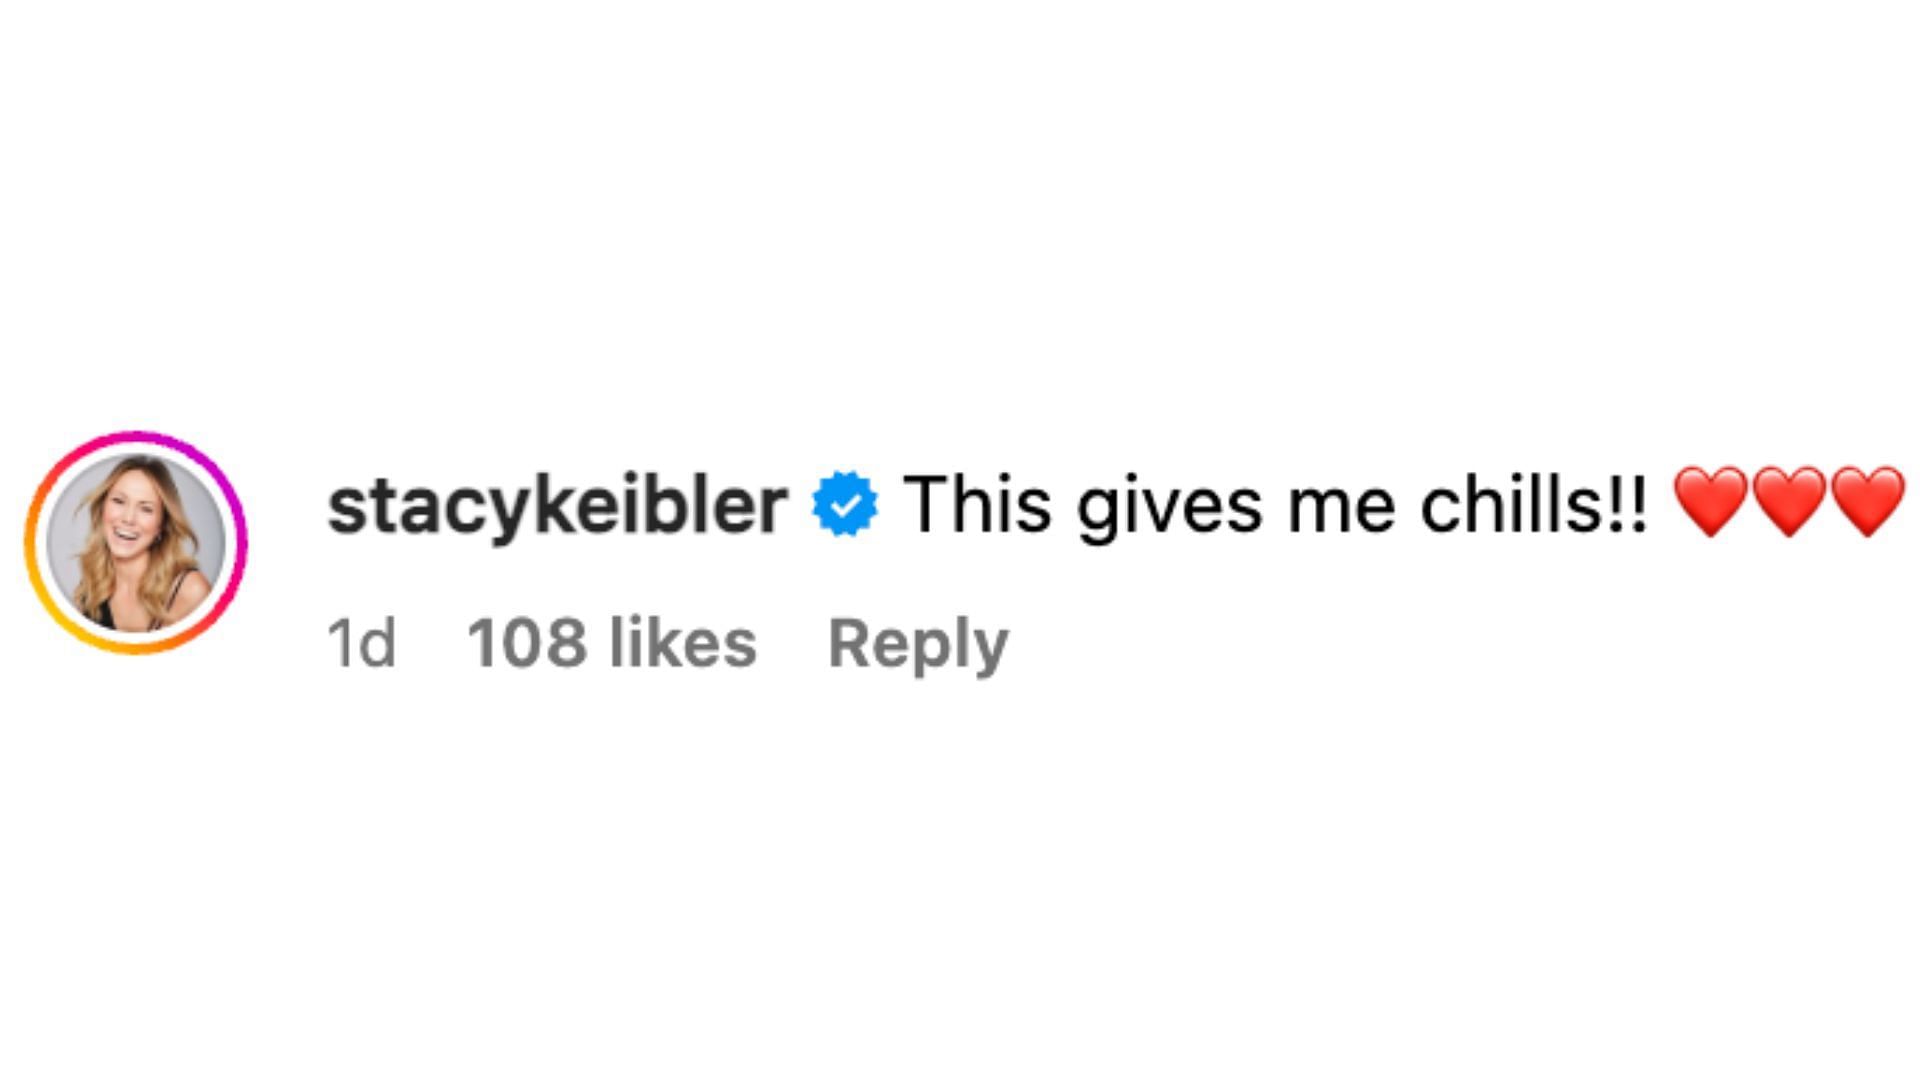 Keibler's response to Dwayne Johnson on Instagram.